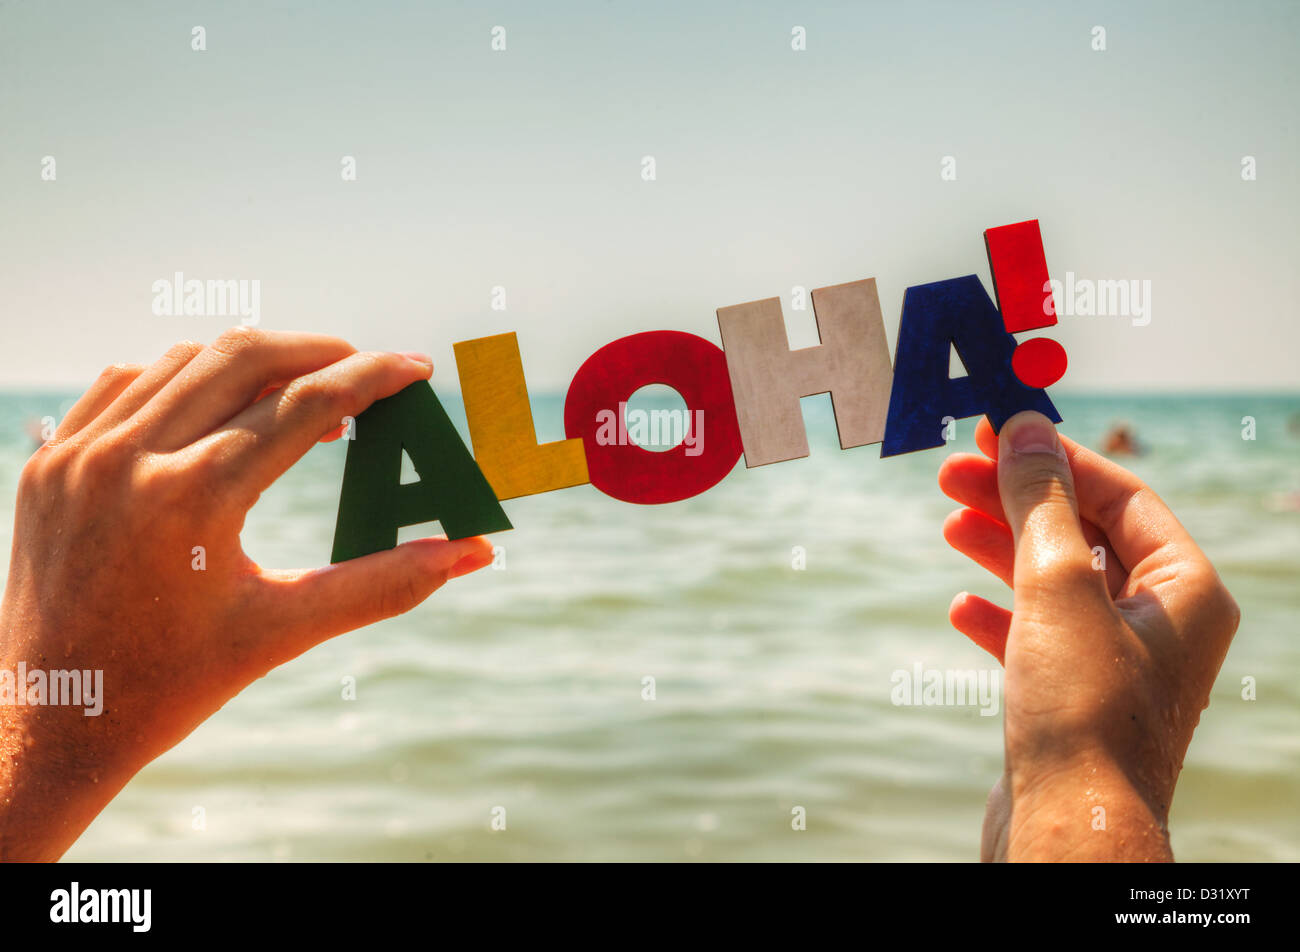 La femmina mano azienda colorita parola "Aloha" contro sfondo blu Foto Stock